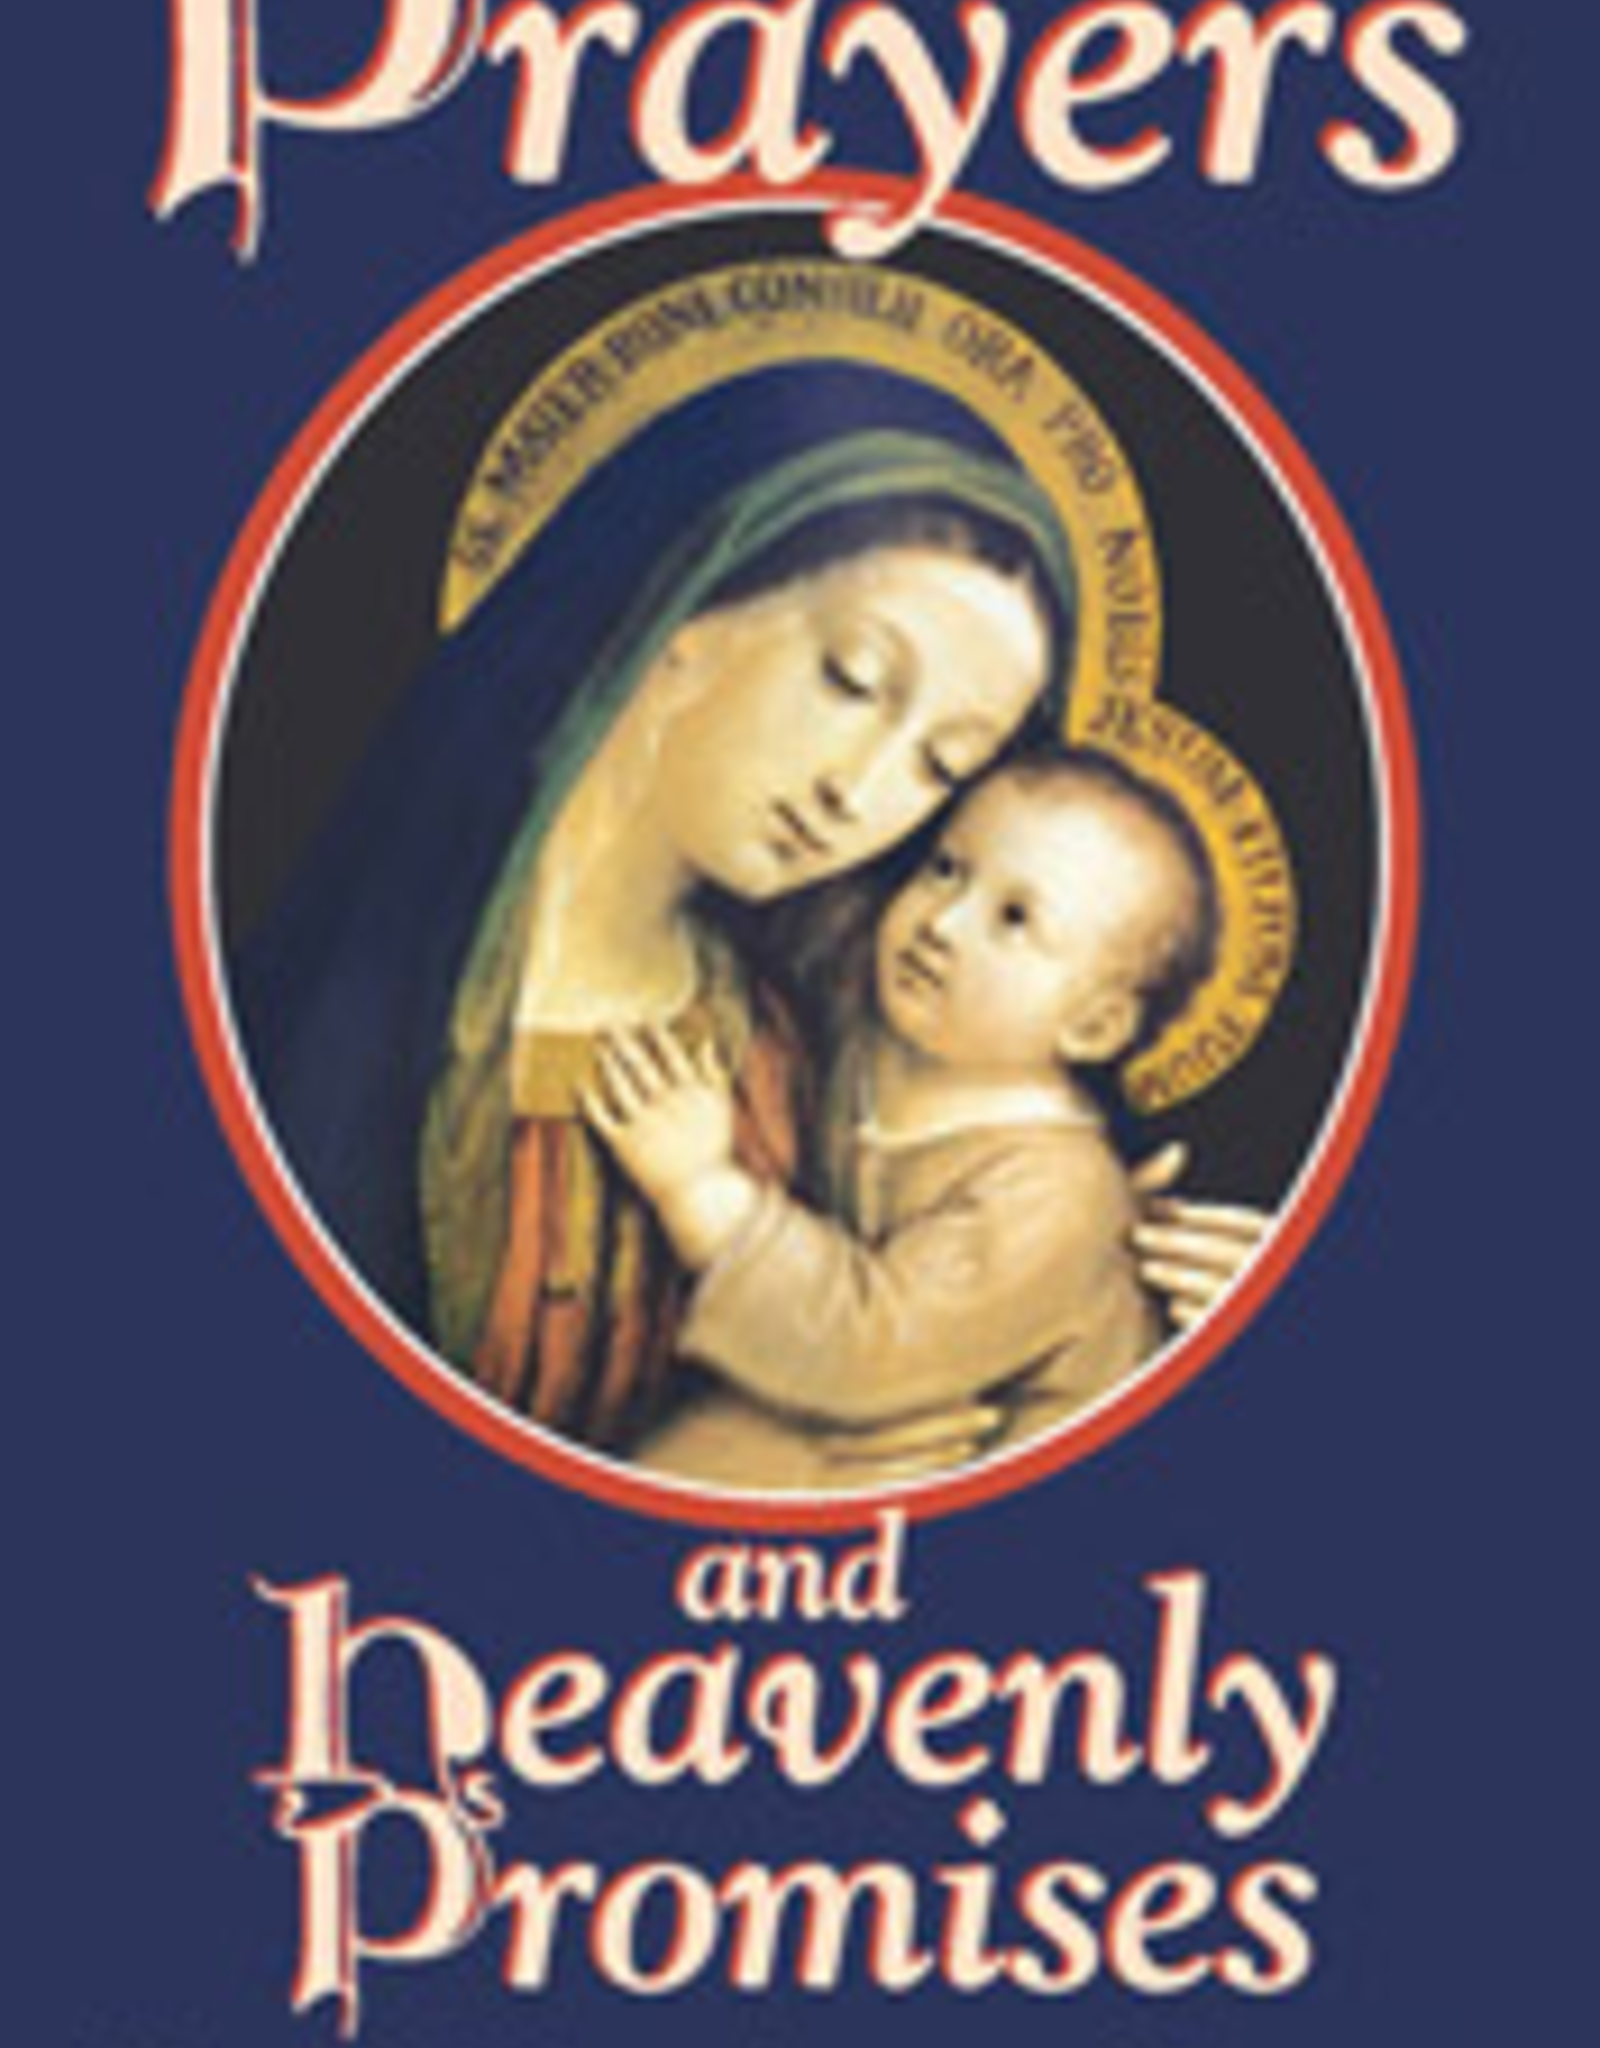 Tan Books Prayers and Heavenly Promises, by Joan Carroll Cruz (paperback)